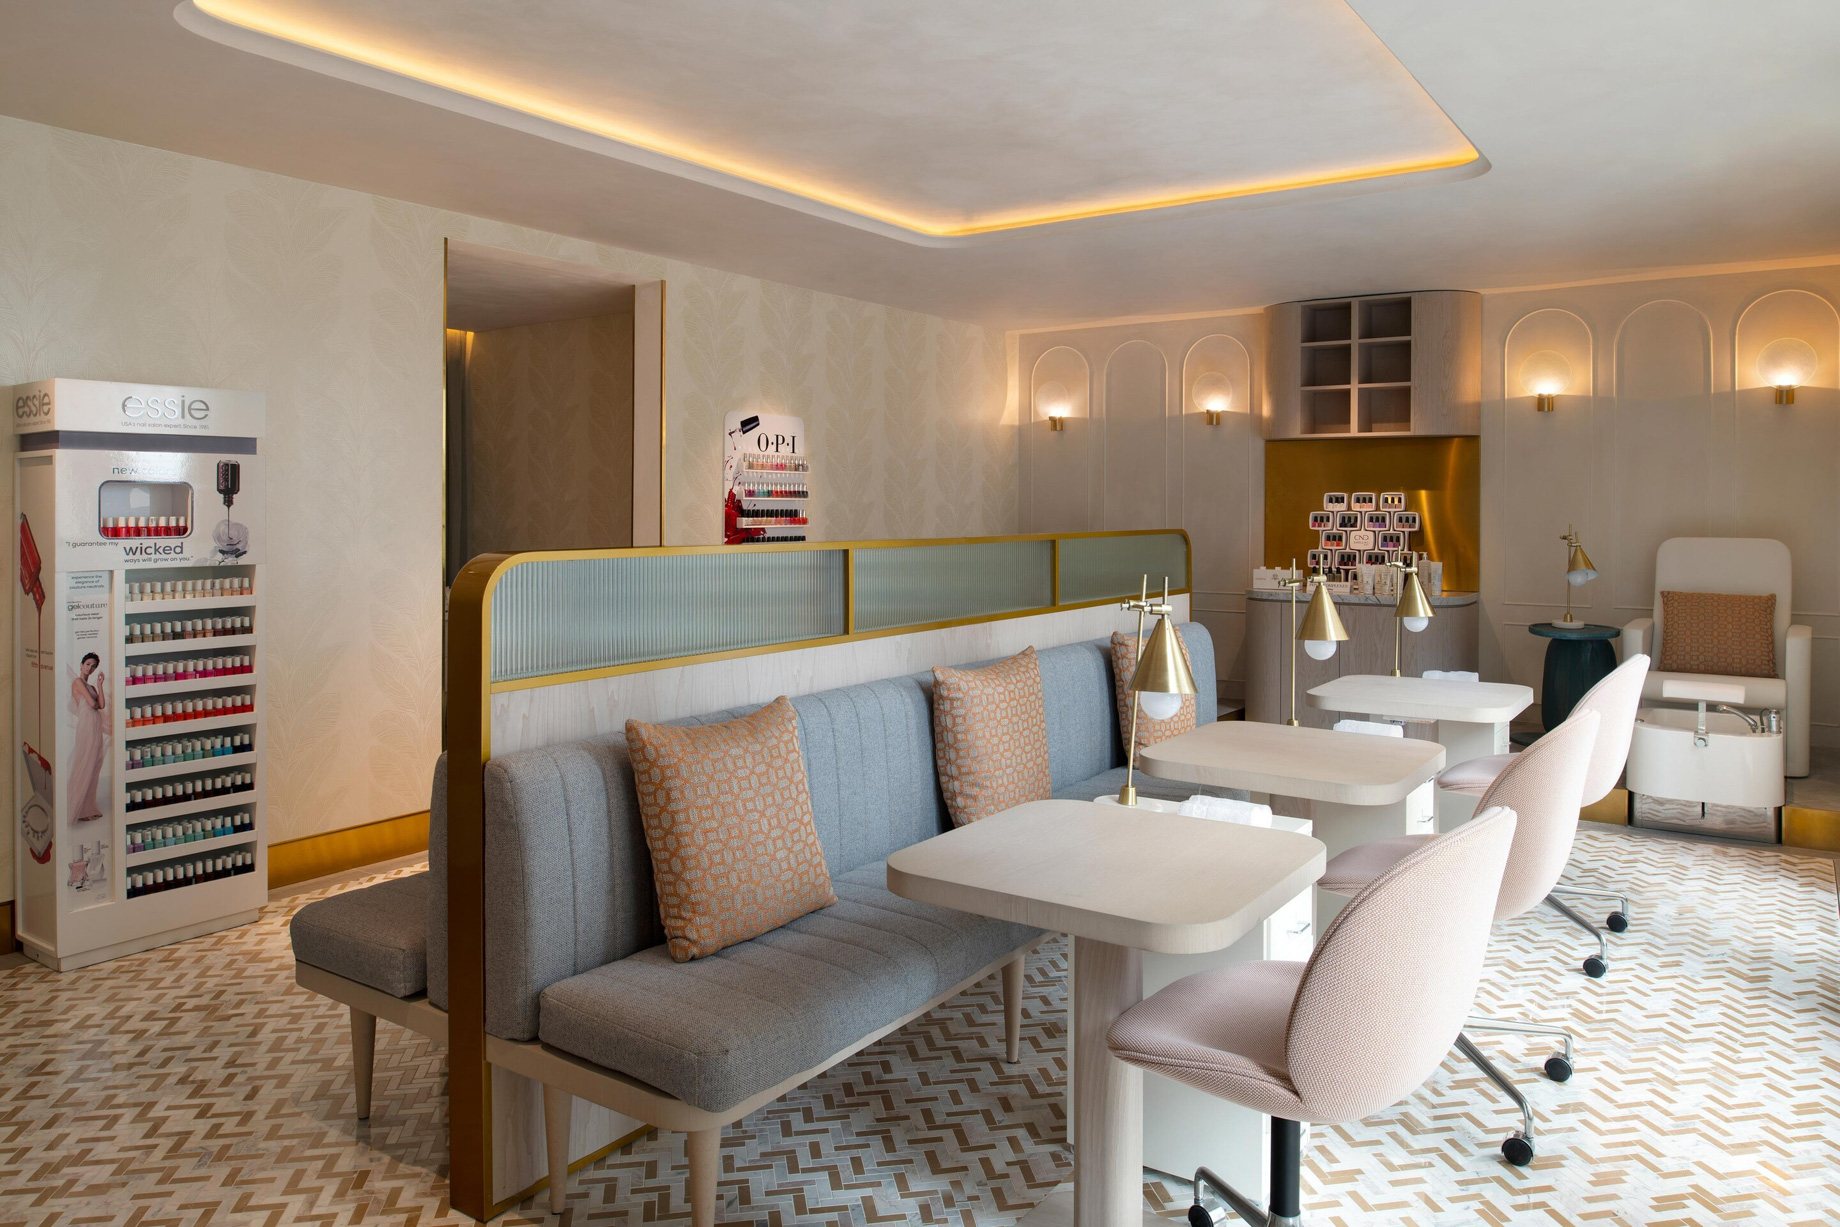 W Doha Hotel - Doha, Qatar - Sisley Paris Spa Nail Salon